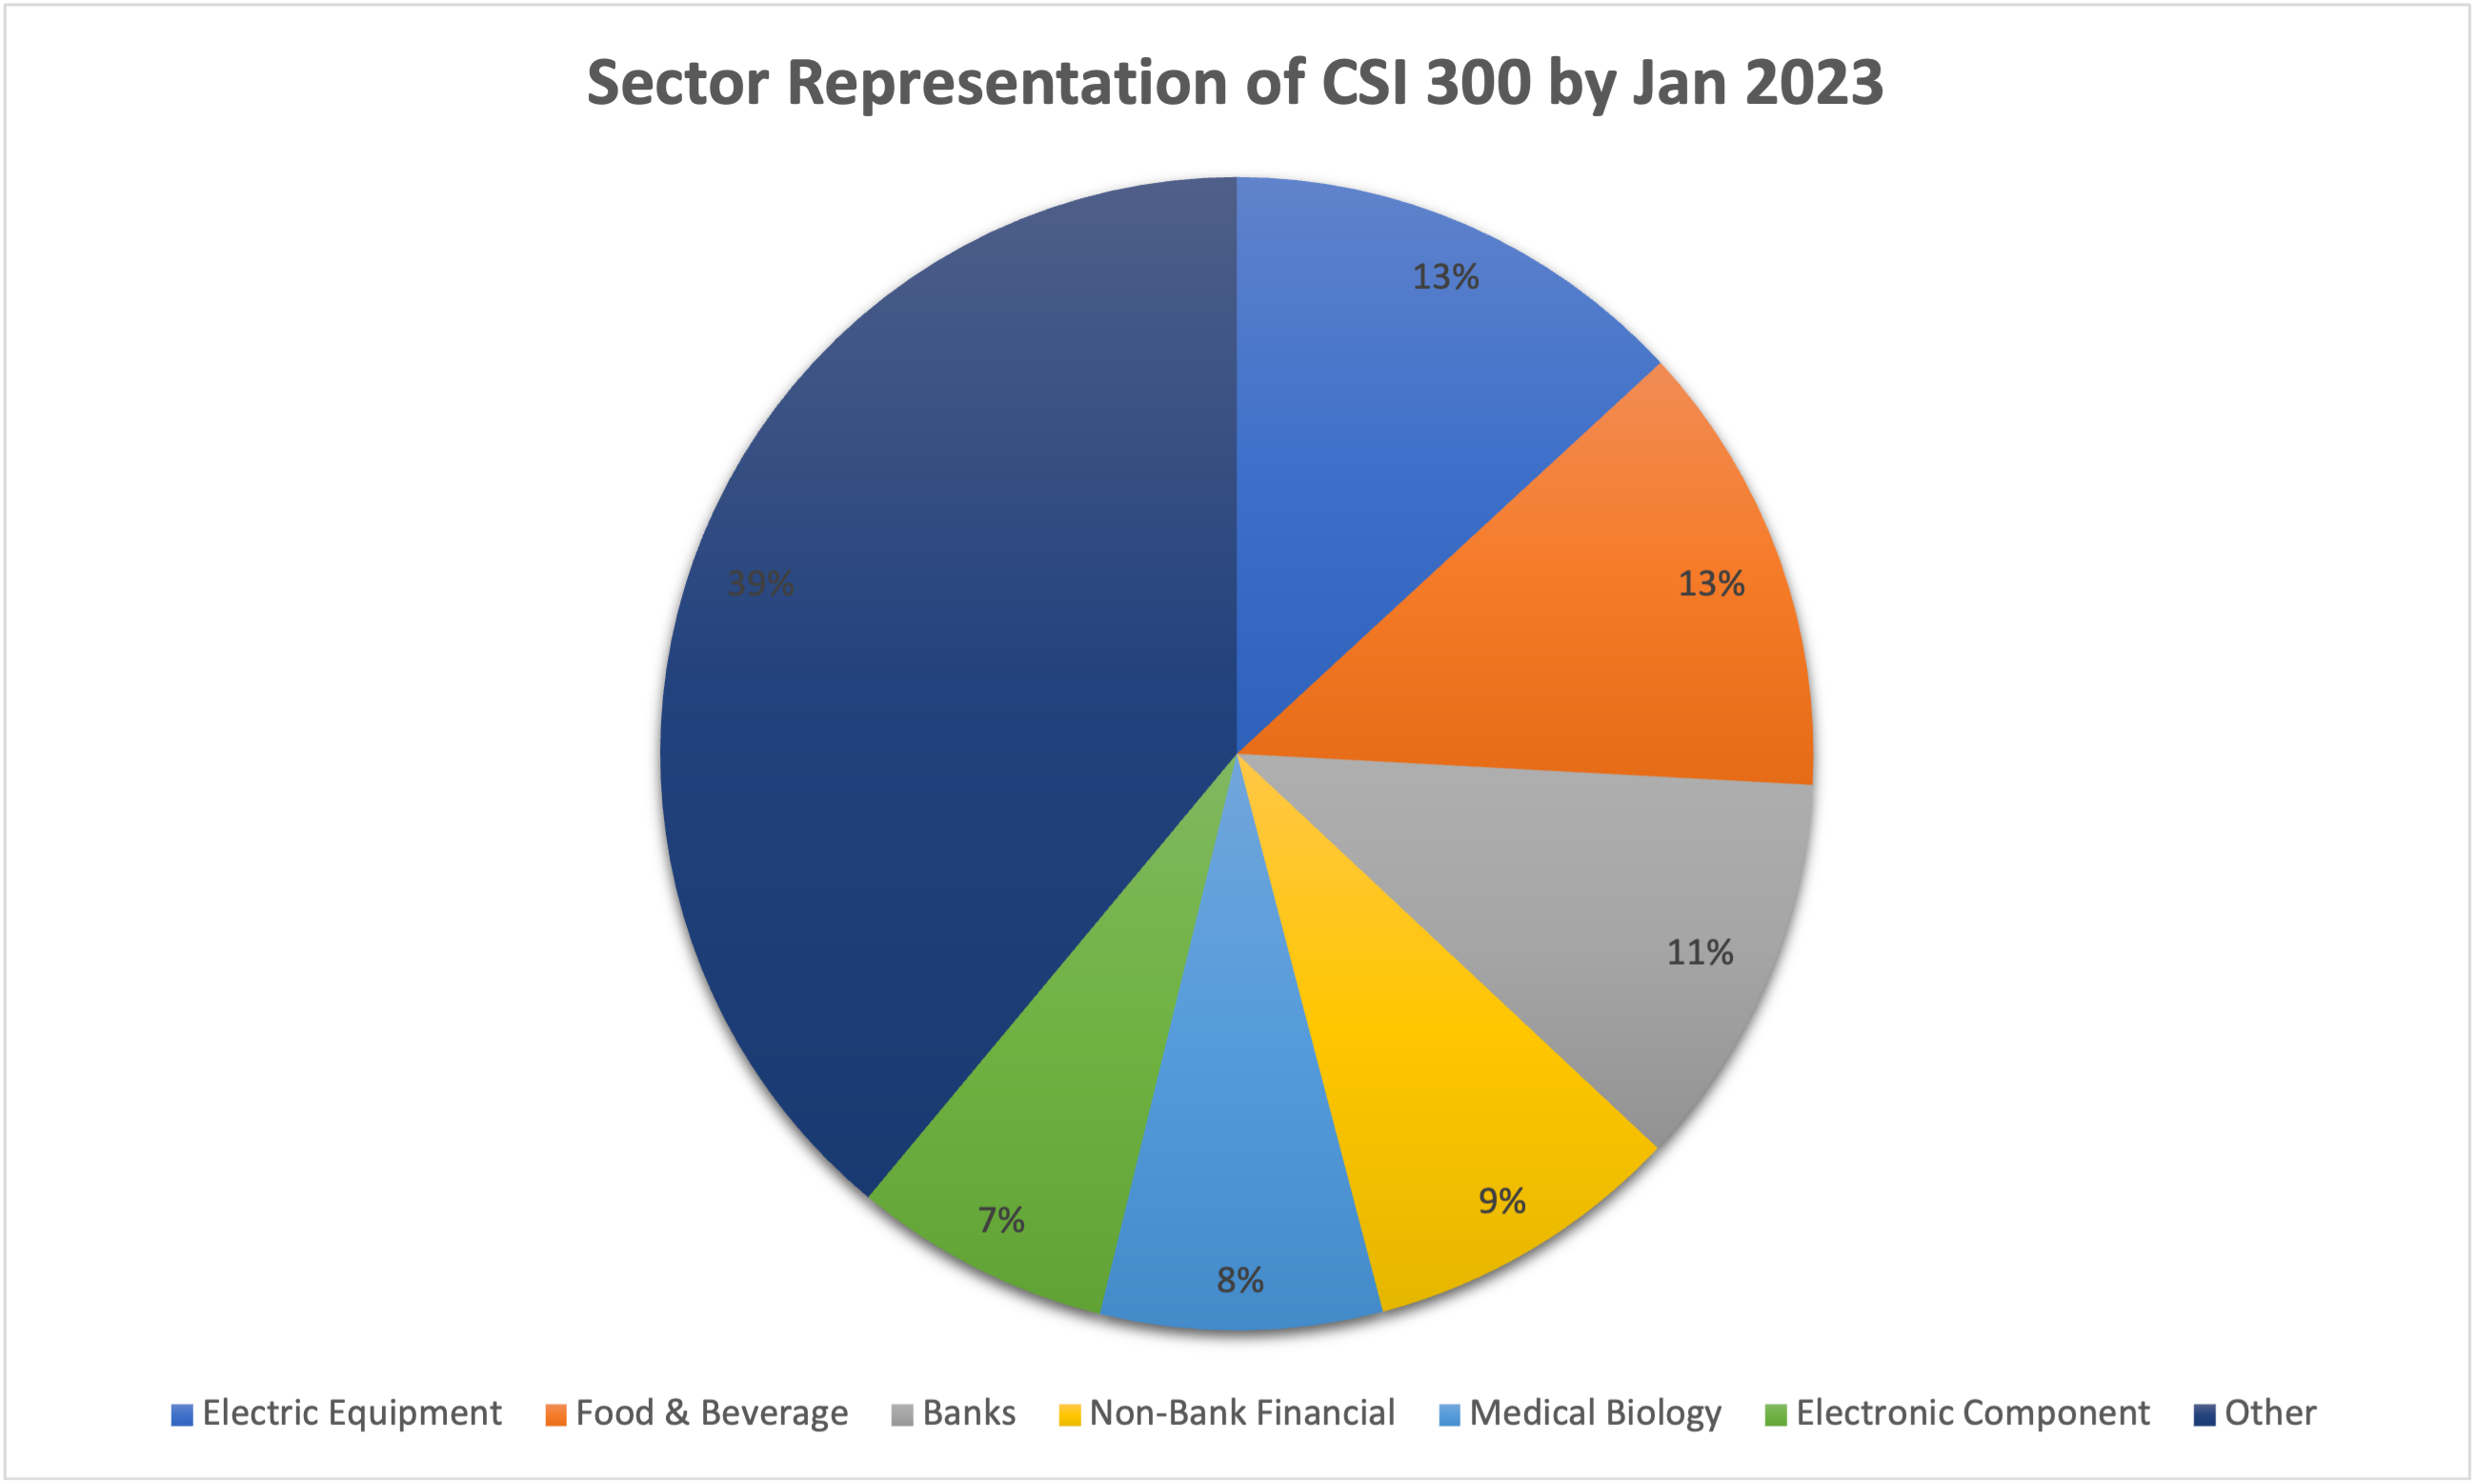 Sector representation in the CSI 300 index